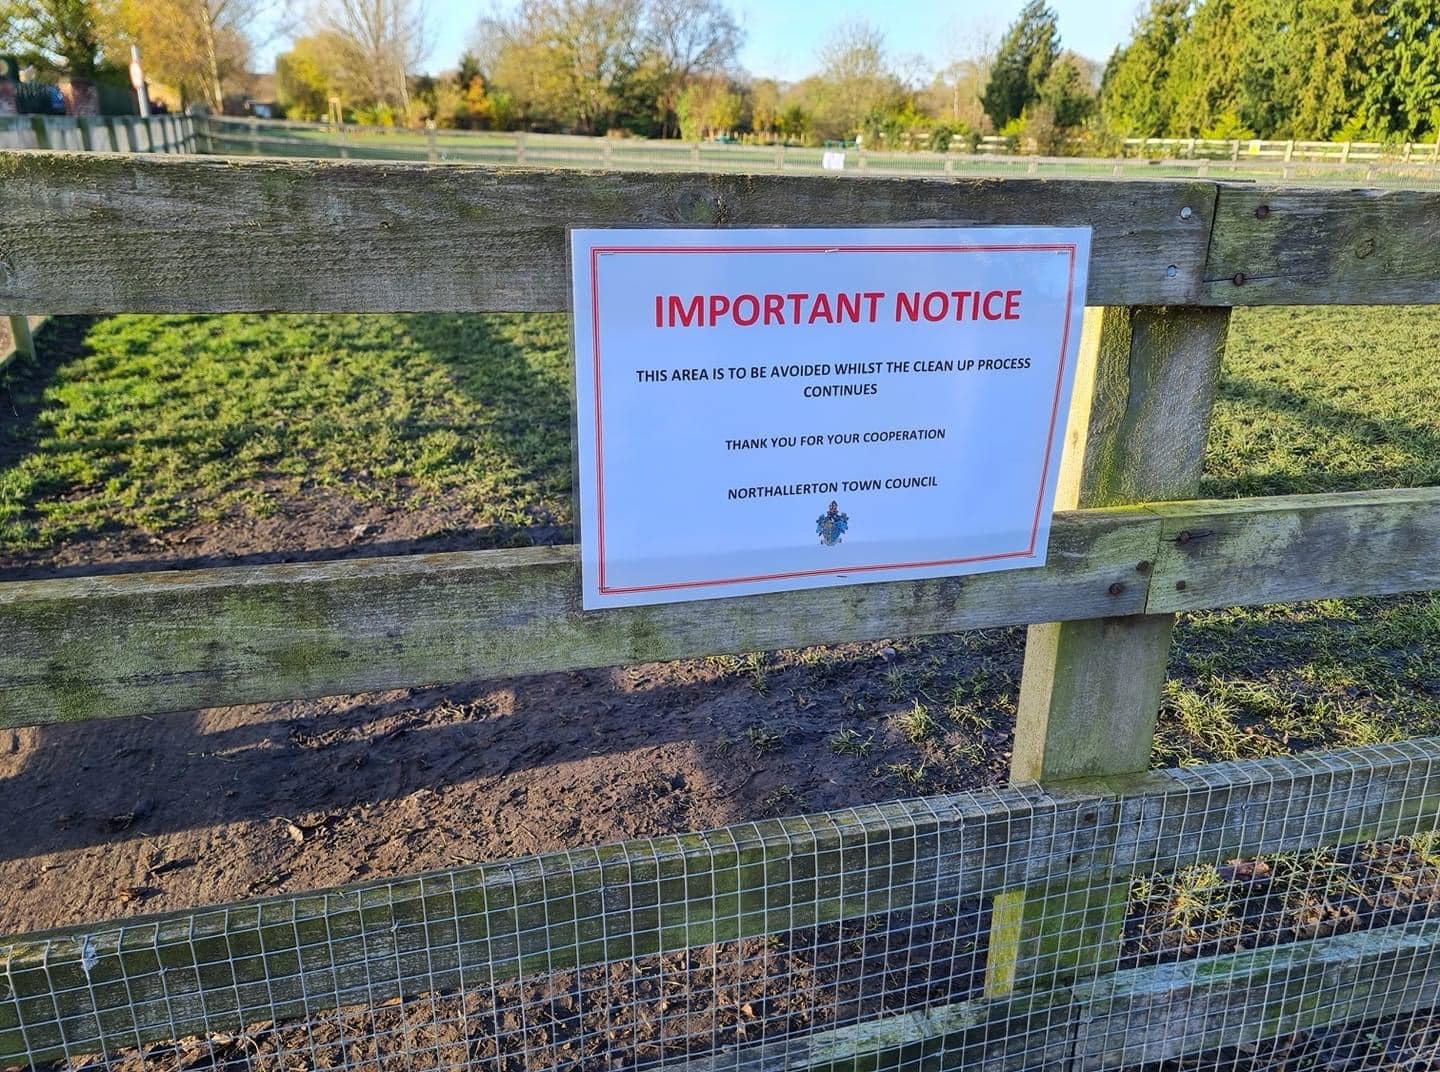 The warning sign at Northallerton park